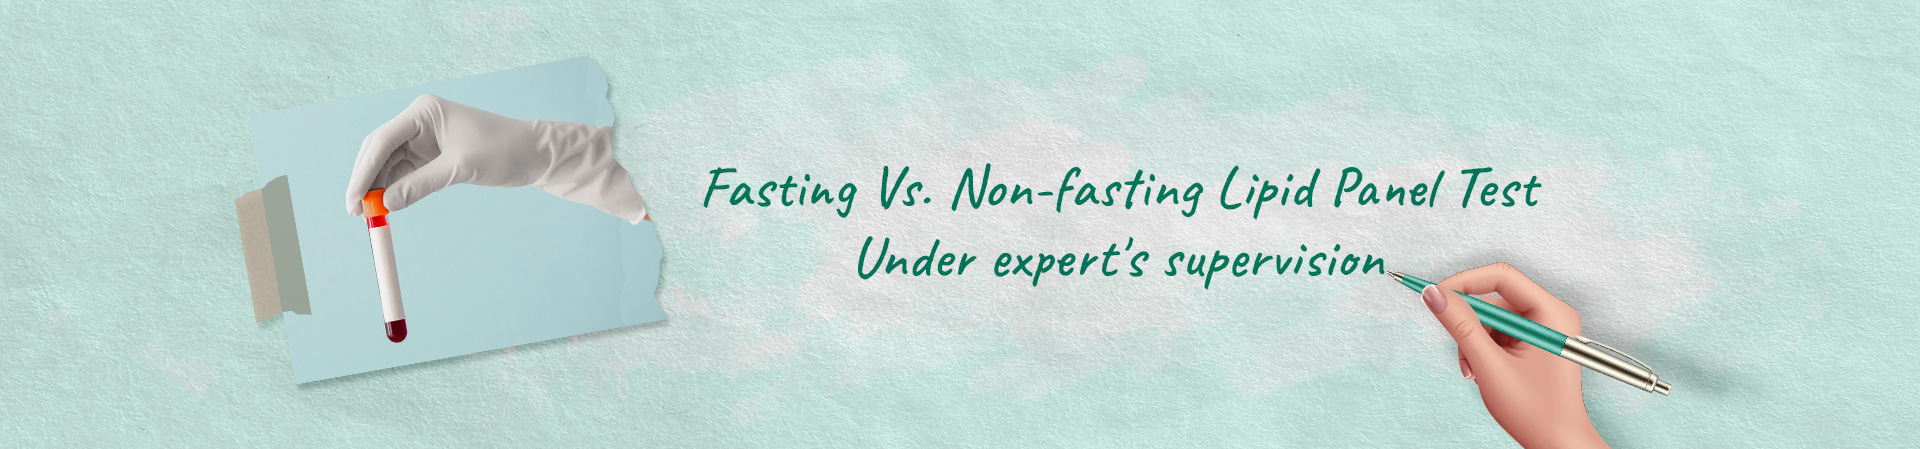 Complete Guide: Fasting vs Nonfasting Lipid Panel Test in Accuhealth Kolkata